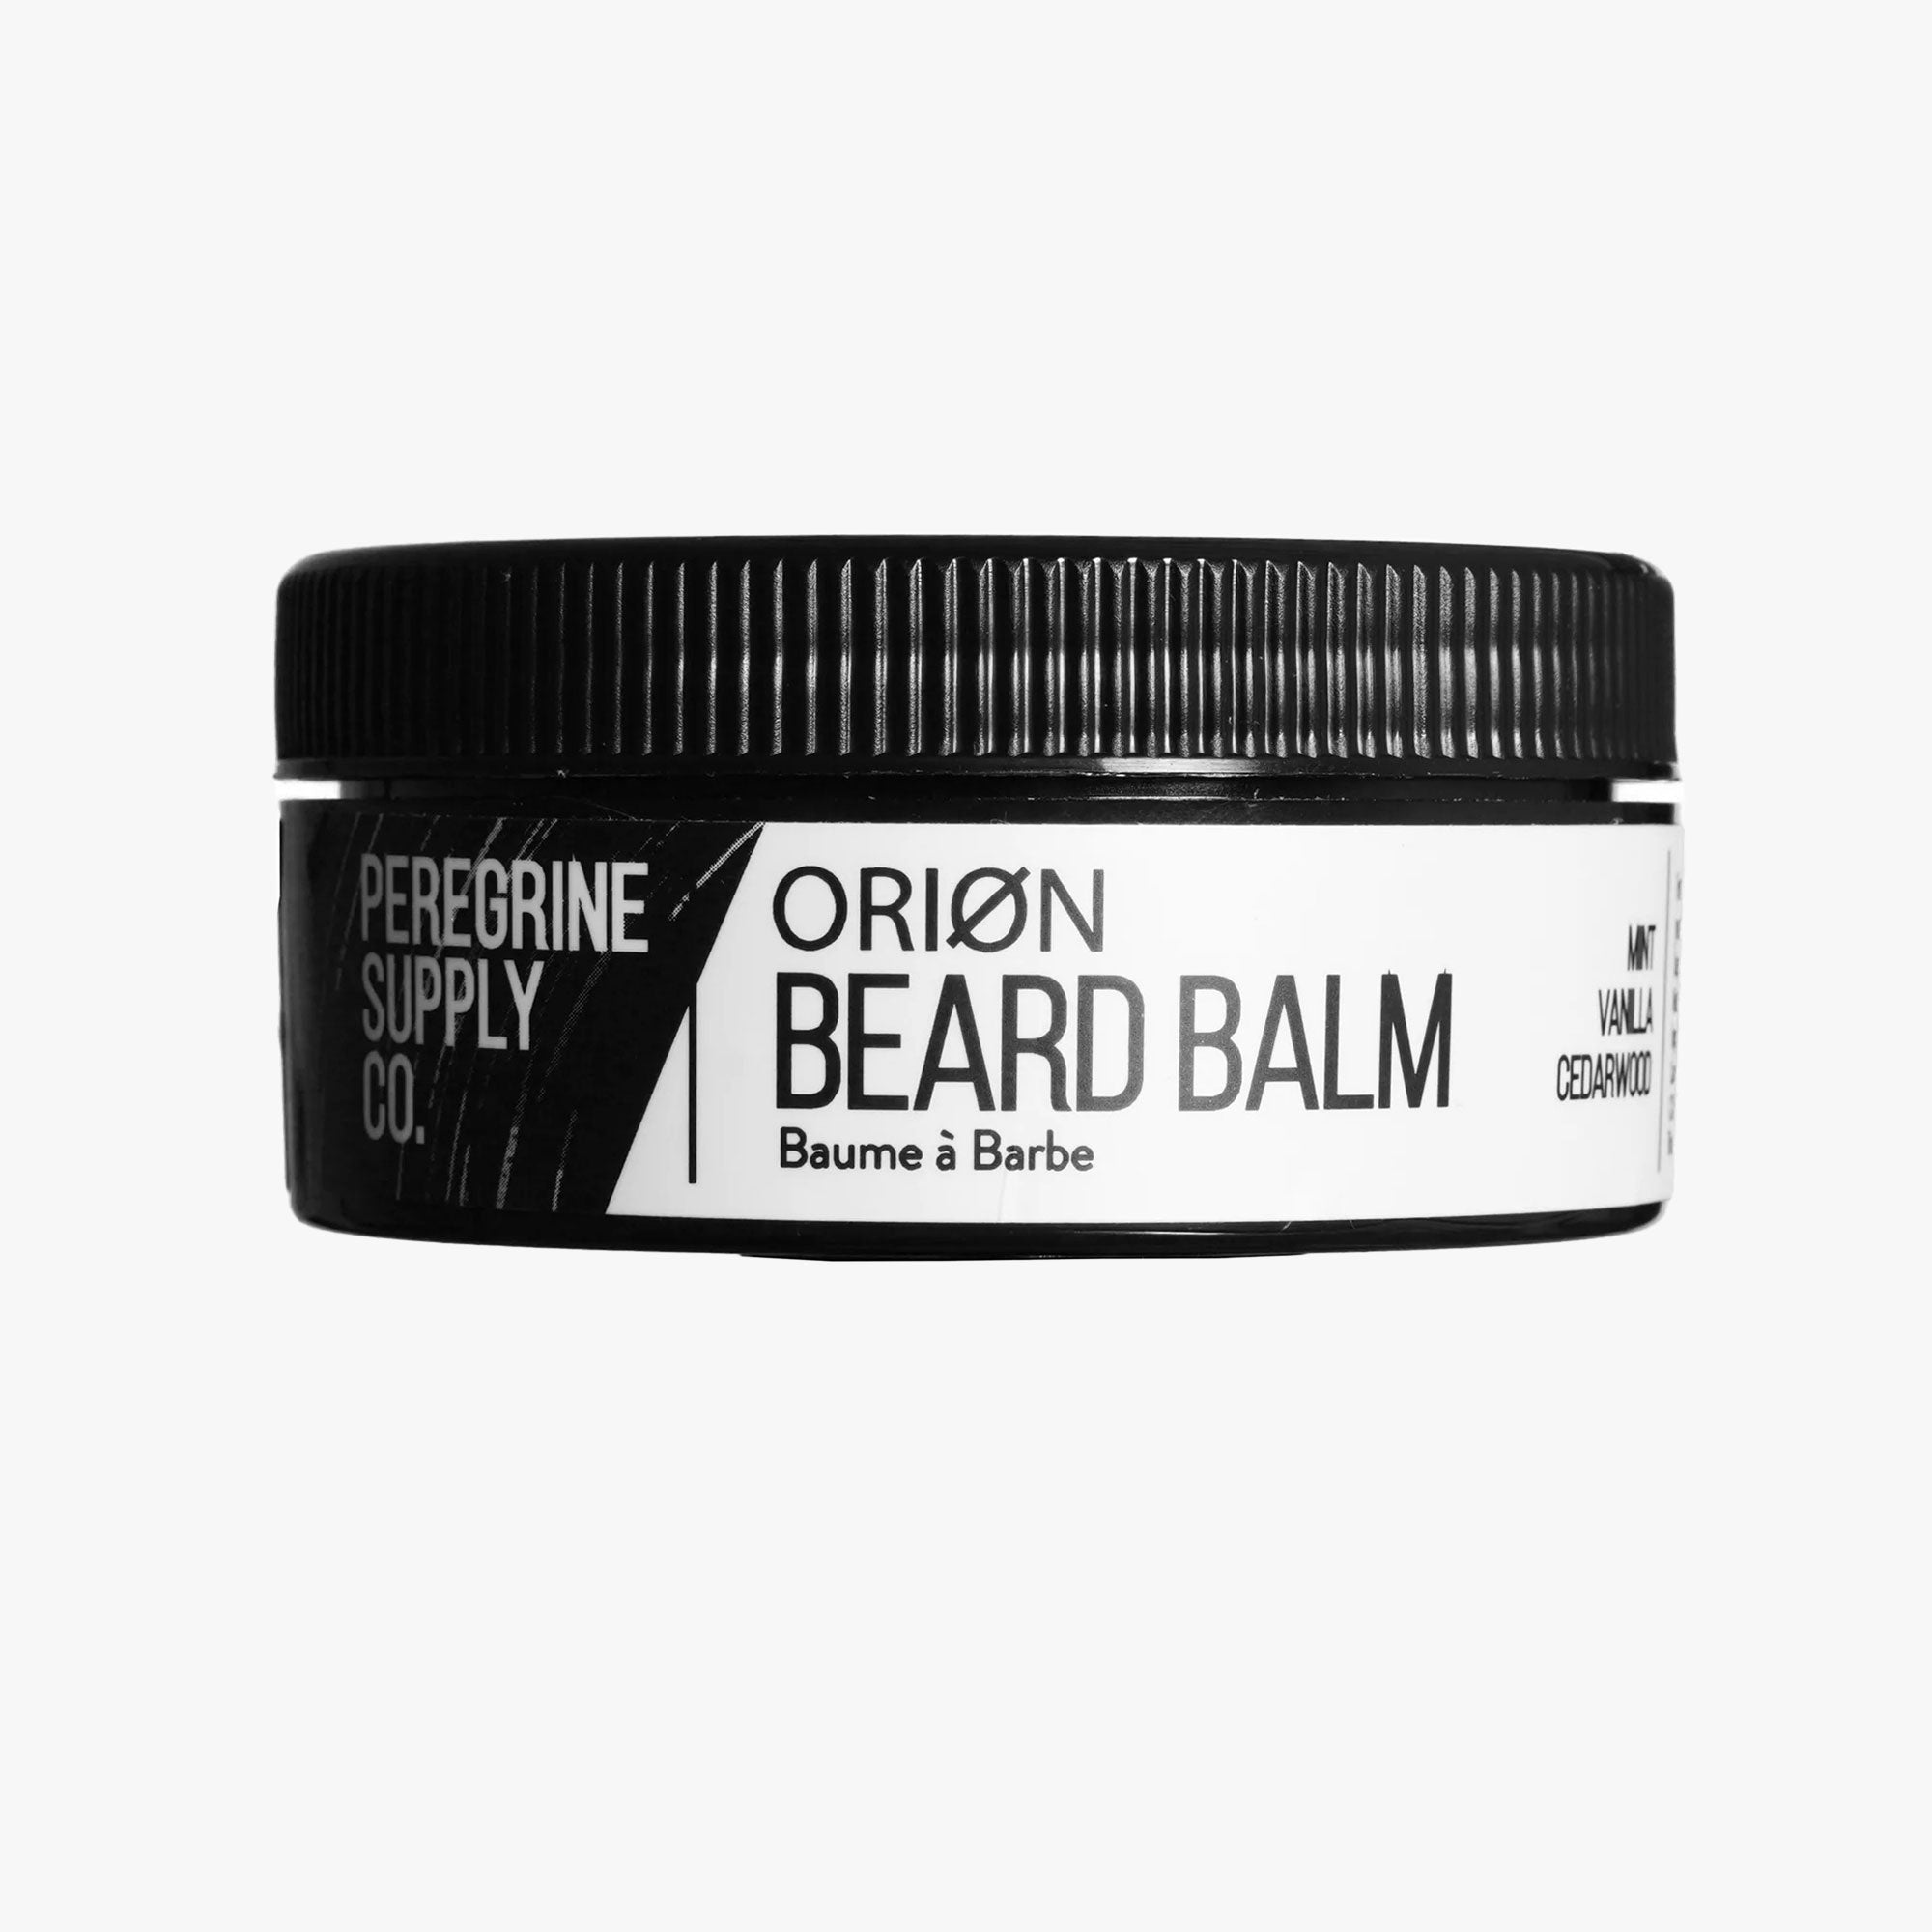 Peregrine Supply Co. Orion Beard Balm